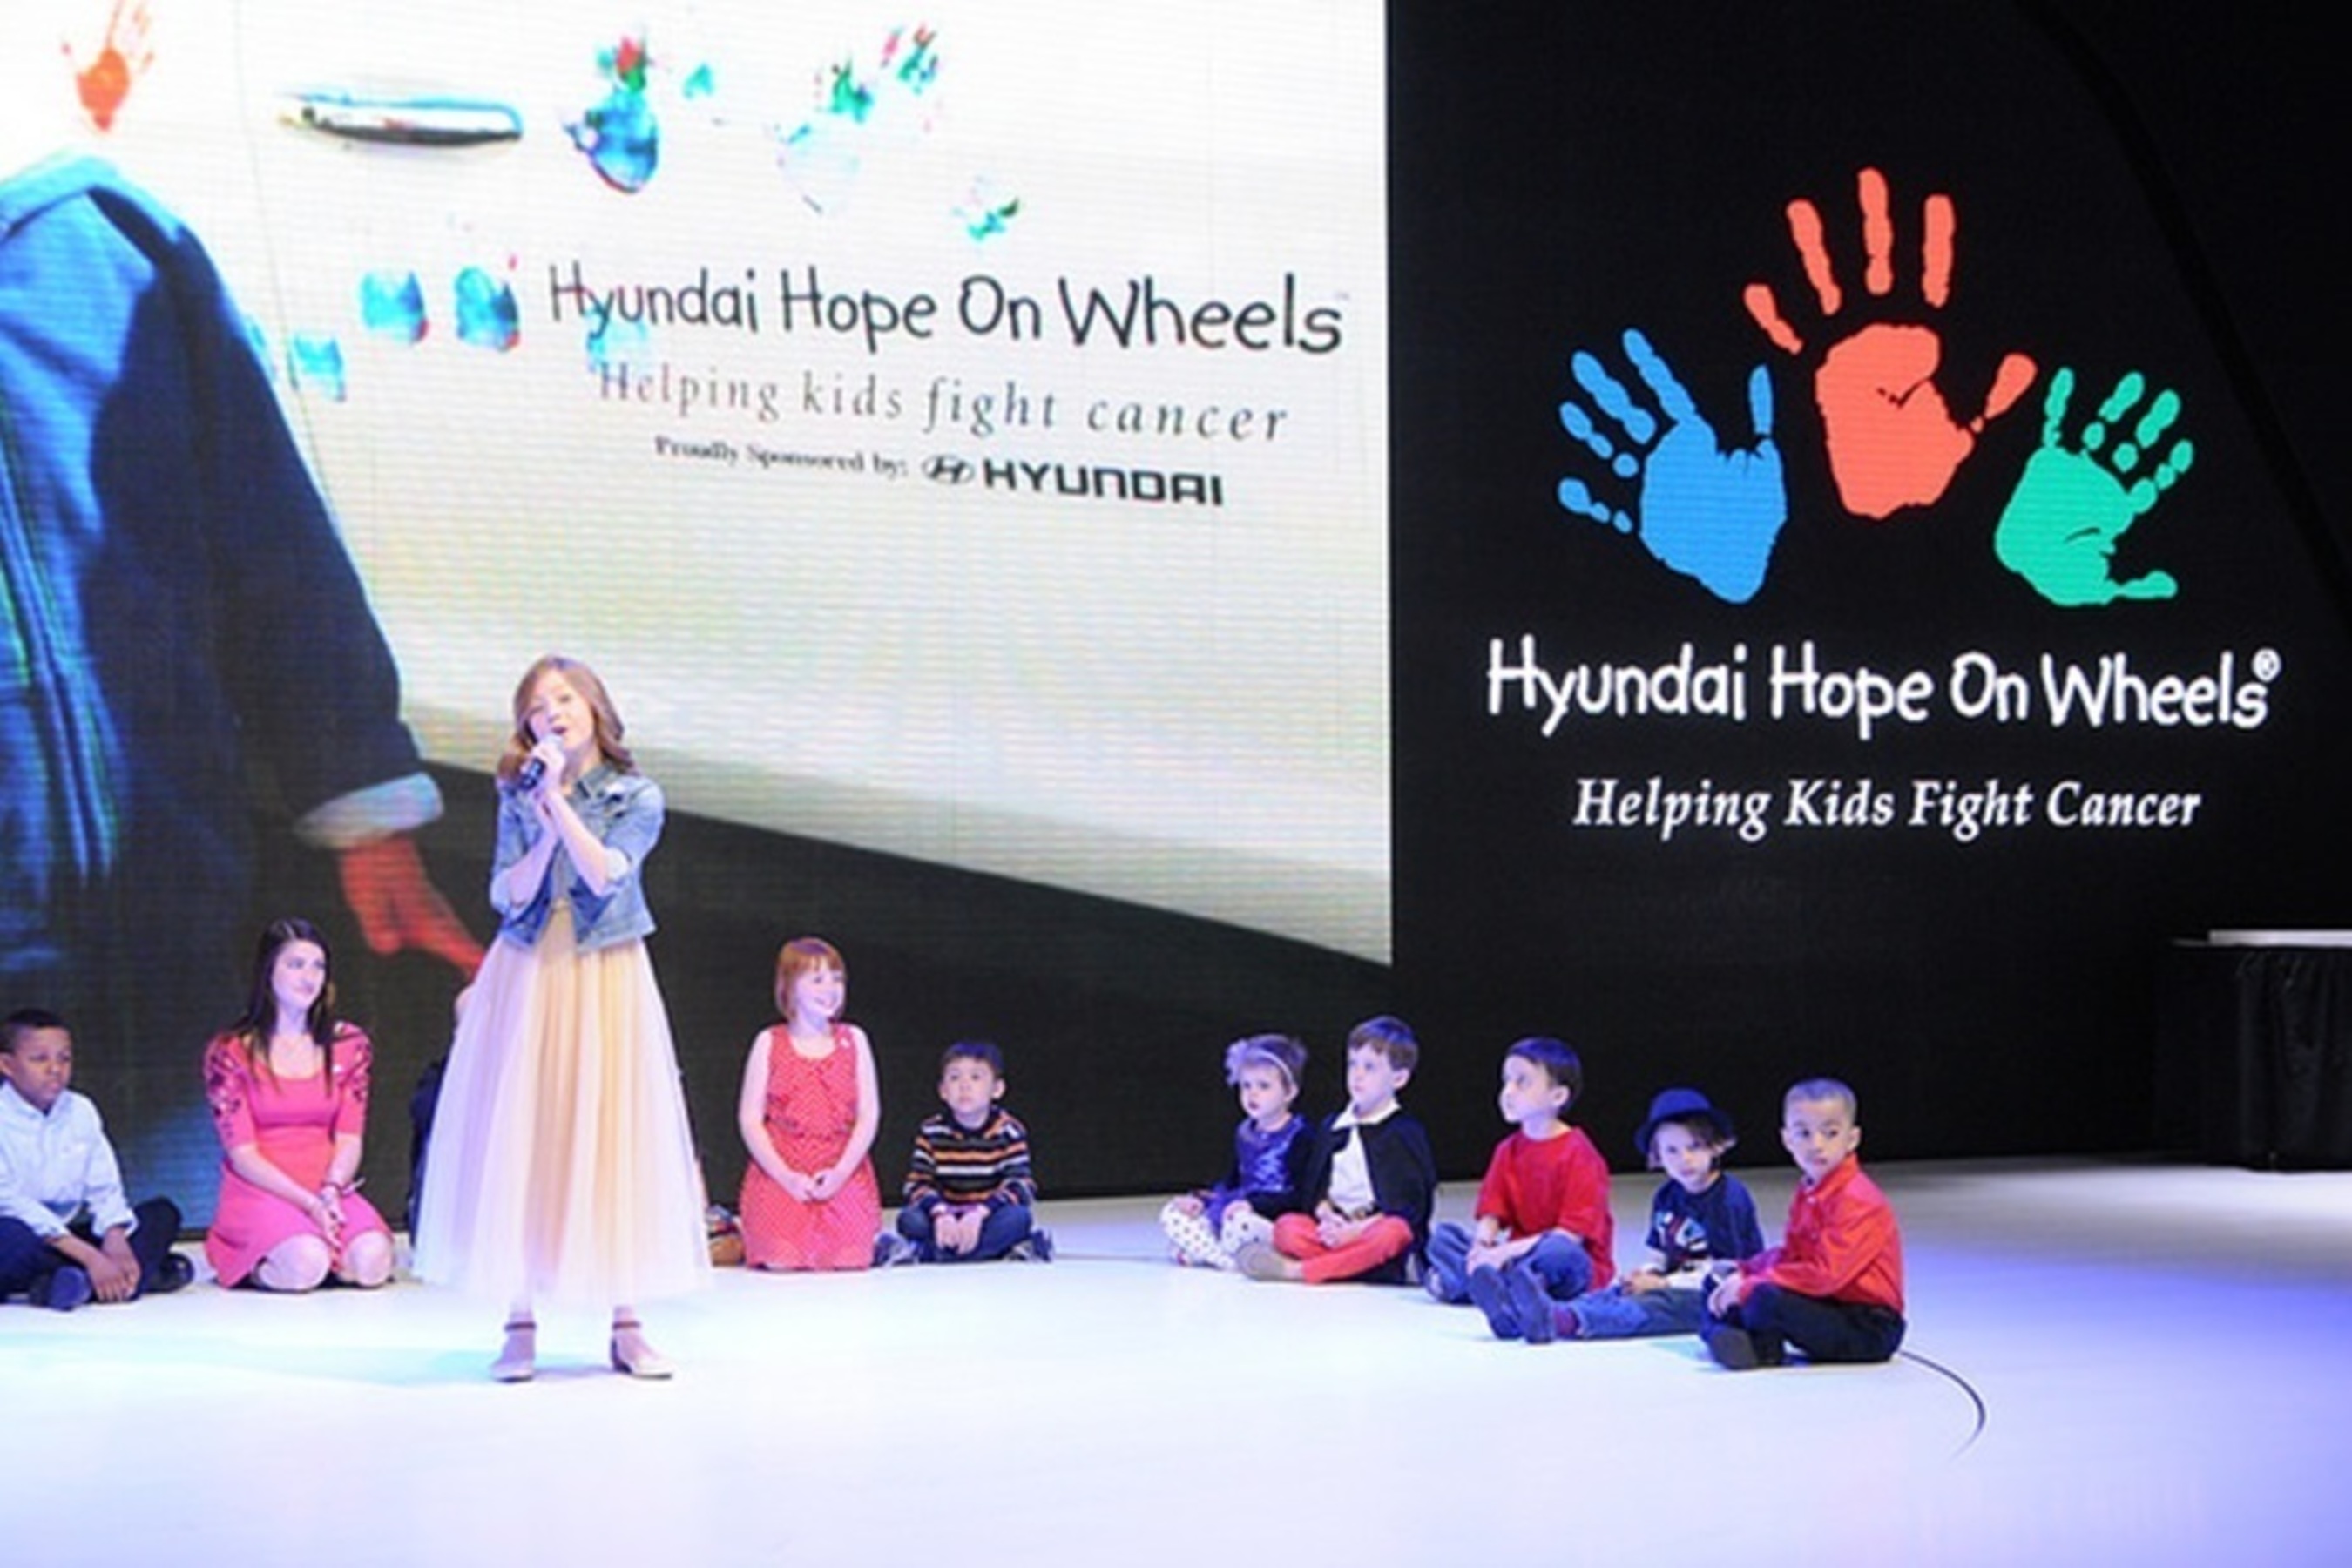 Lexi Walker performs at Hope On Wheels launch presentation (PRNewsFoto/Hyundai Hope On Wheels)